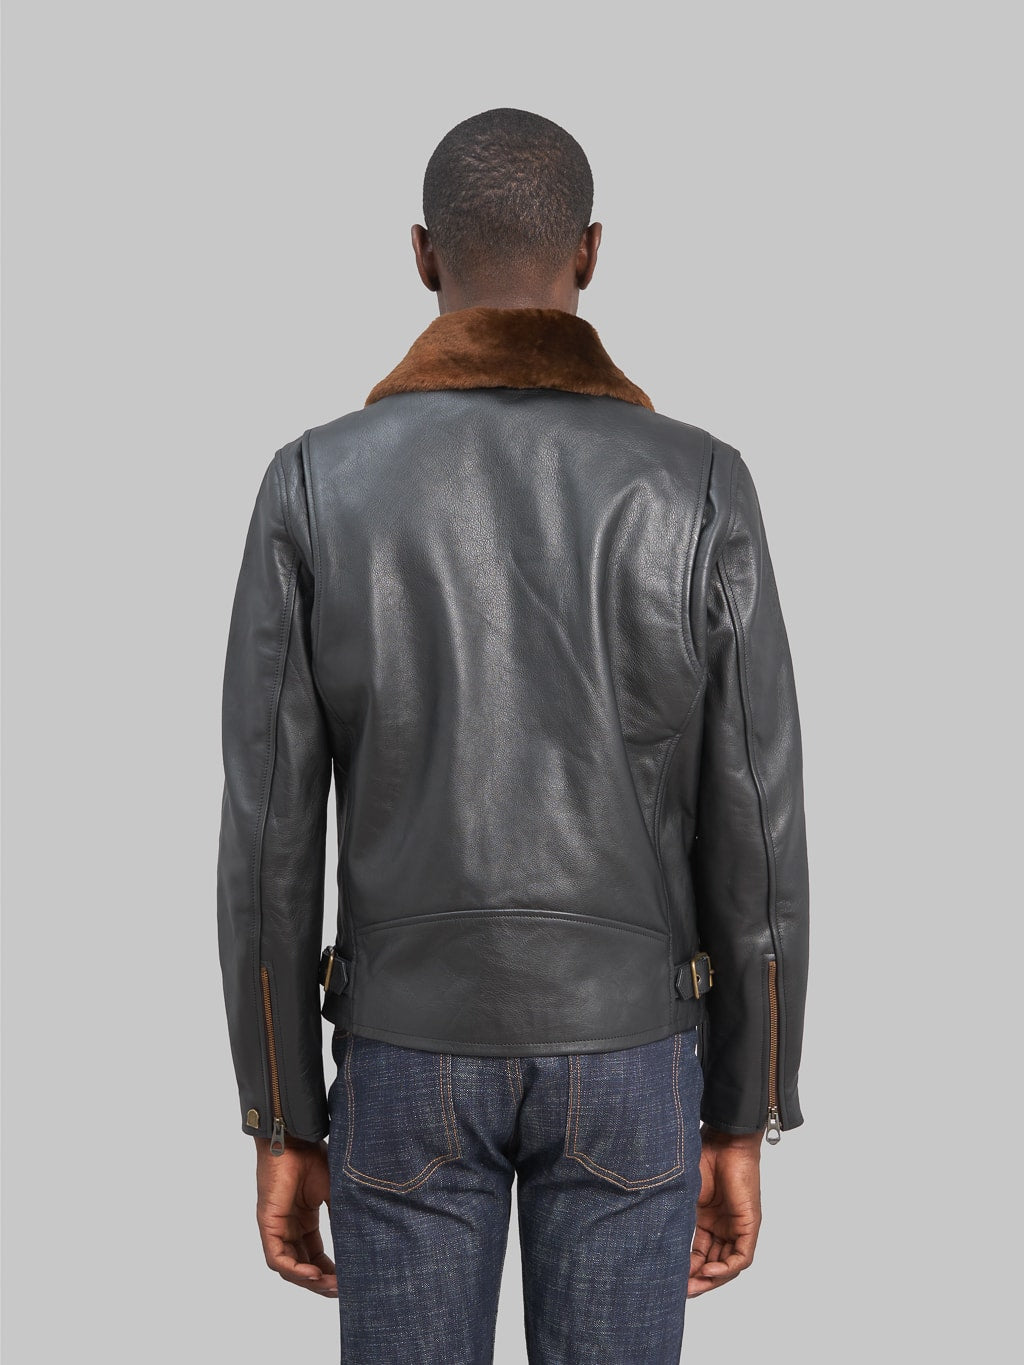 Shangri-La Heritage "Varenne" Fur Collar Black Leather Jacket